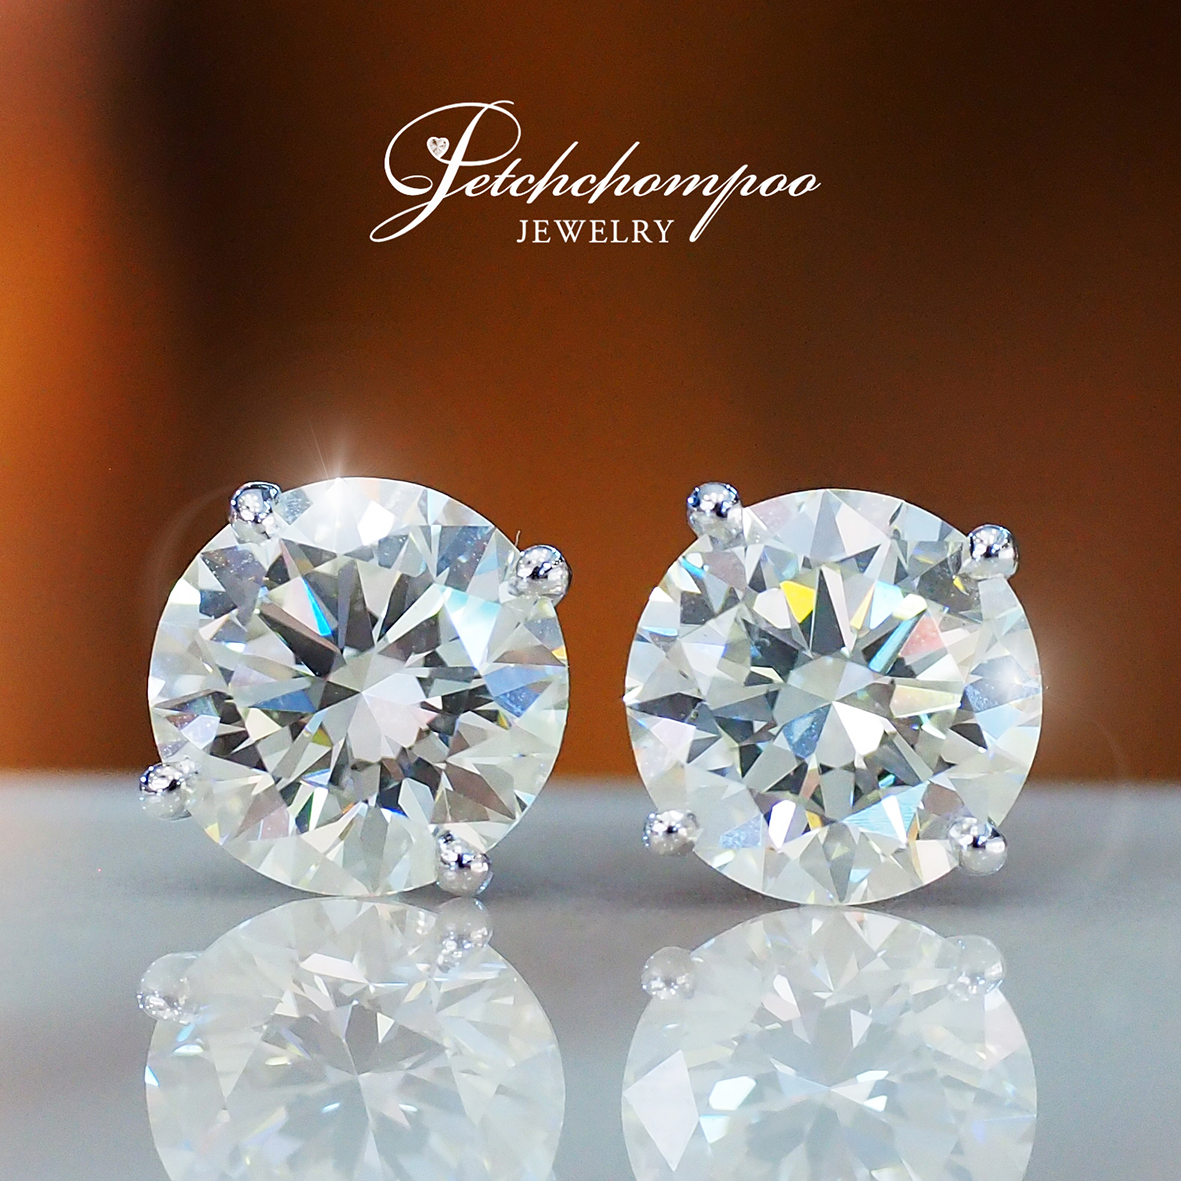 [27431] HRD certified diamond earrings, 3 carats Discount 1,990,000